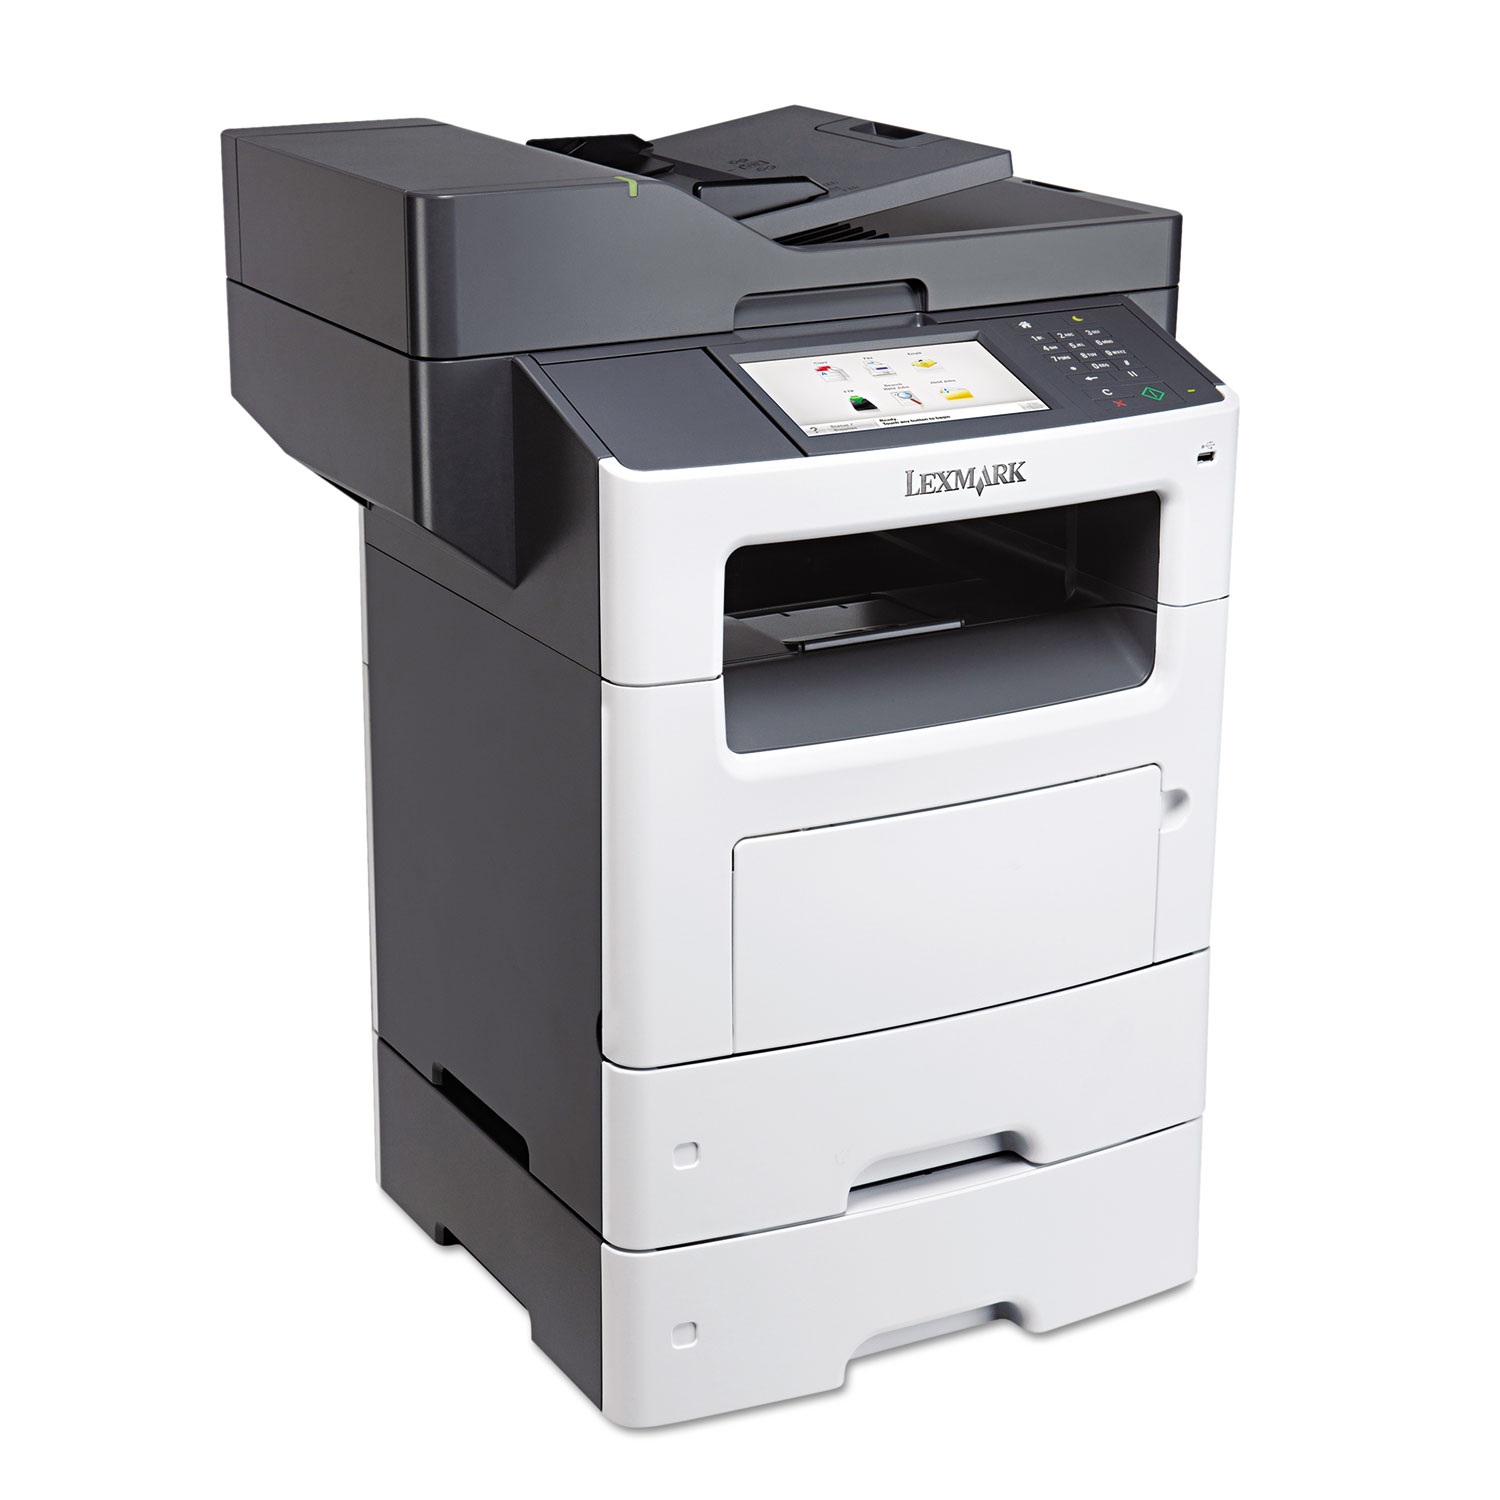 MX611dte Multifunction Laser Printer, Copy/Fax/Print/Scan